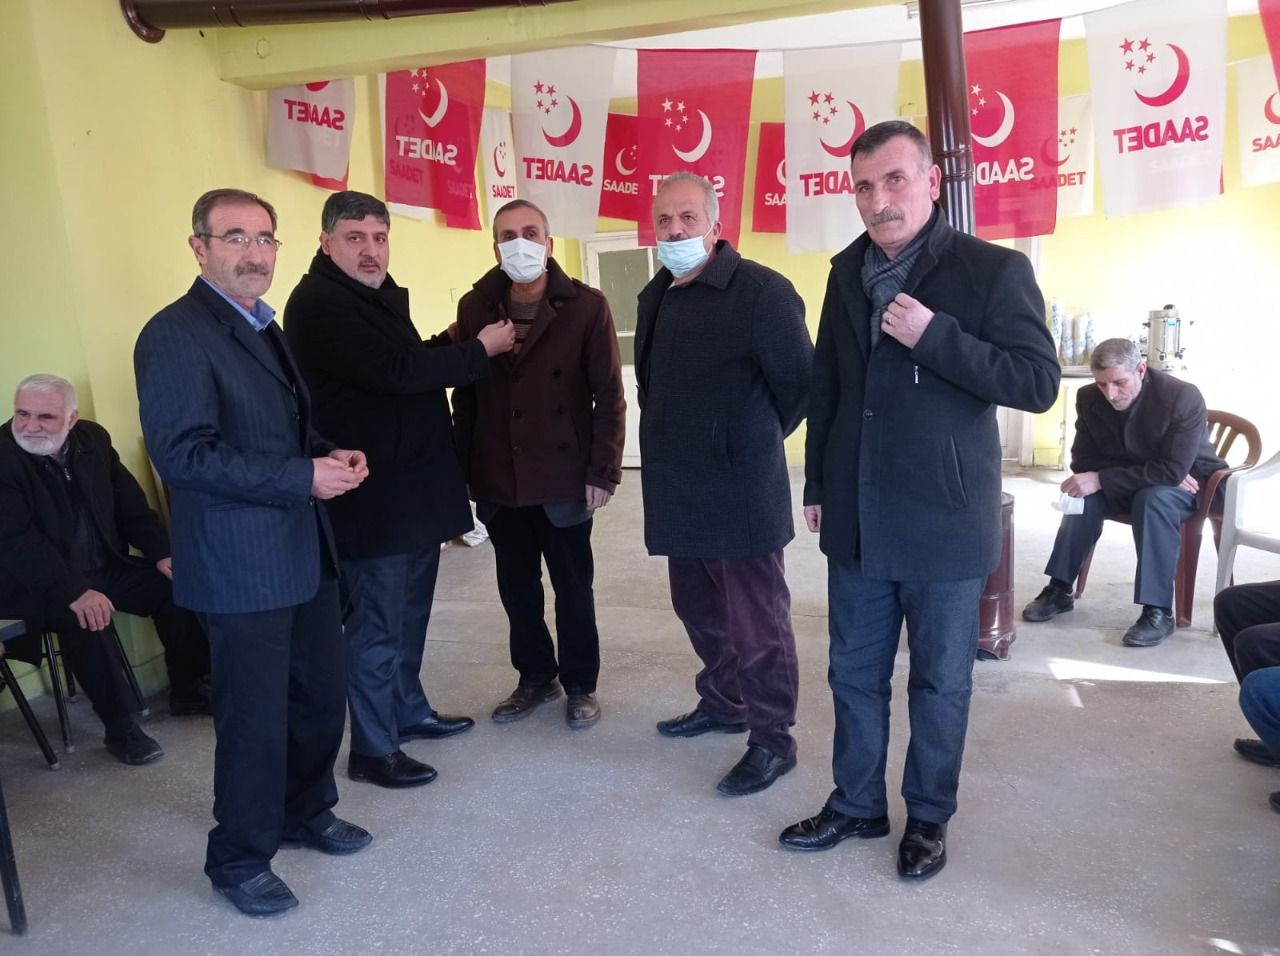 Saadet Party Hekimhan District President Lütfi Şahin reassured